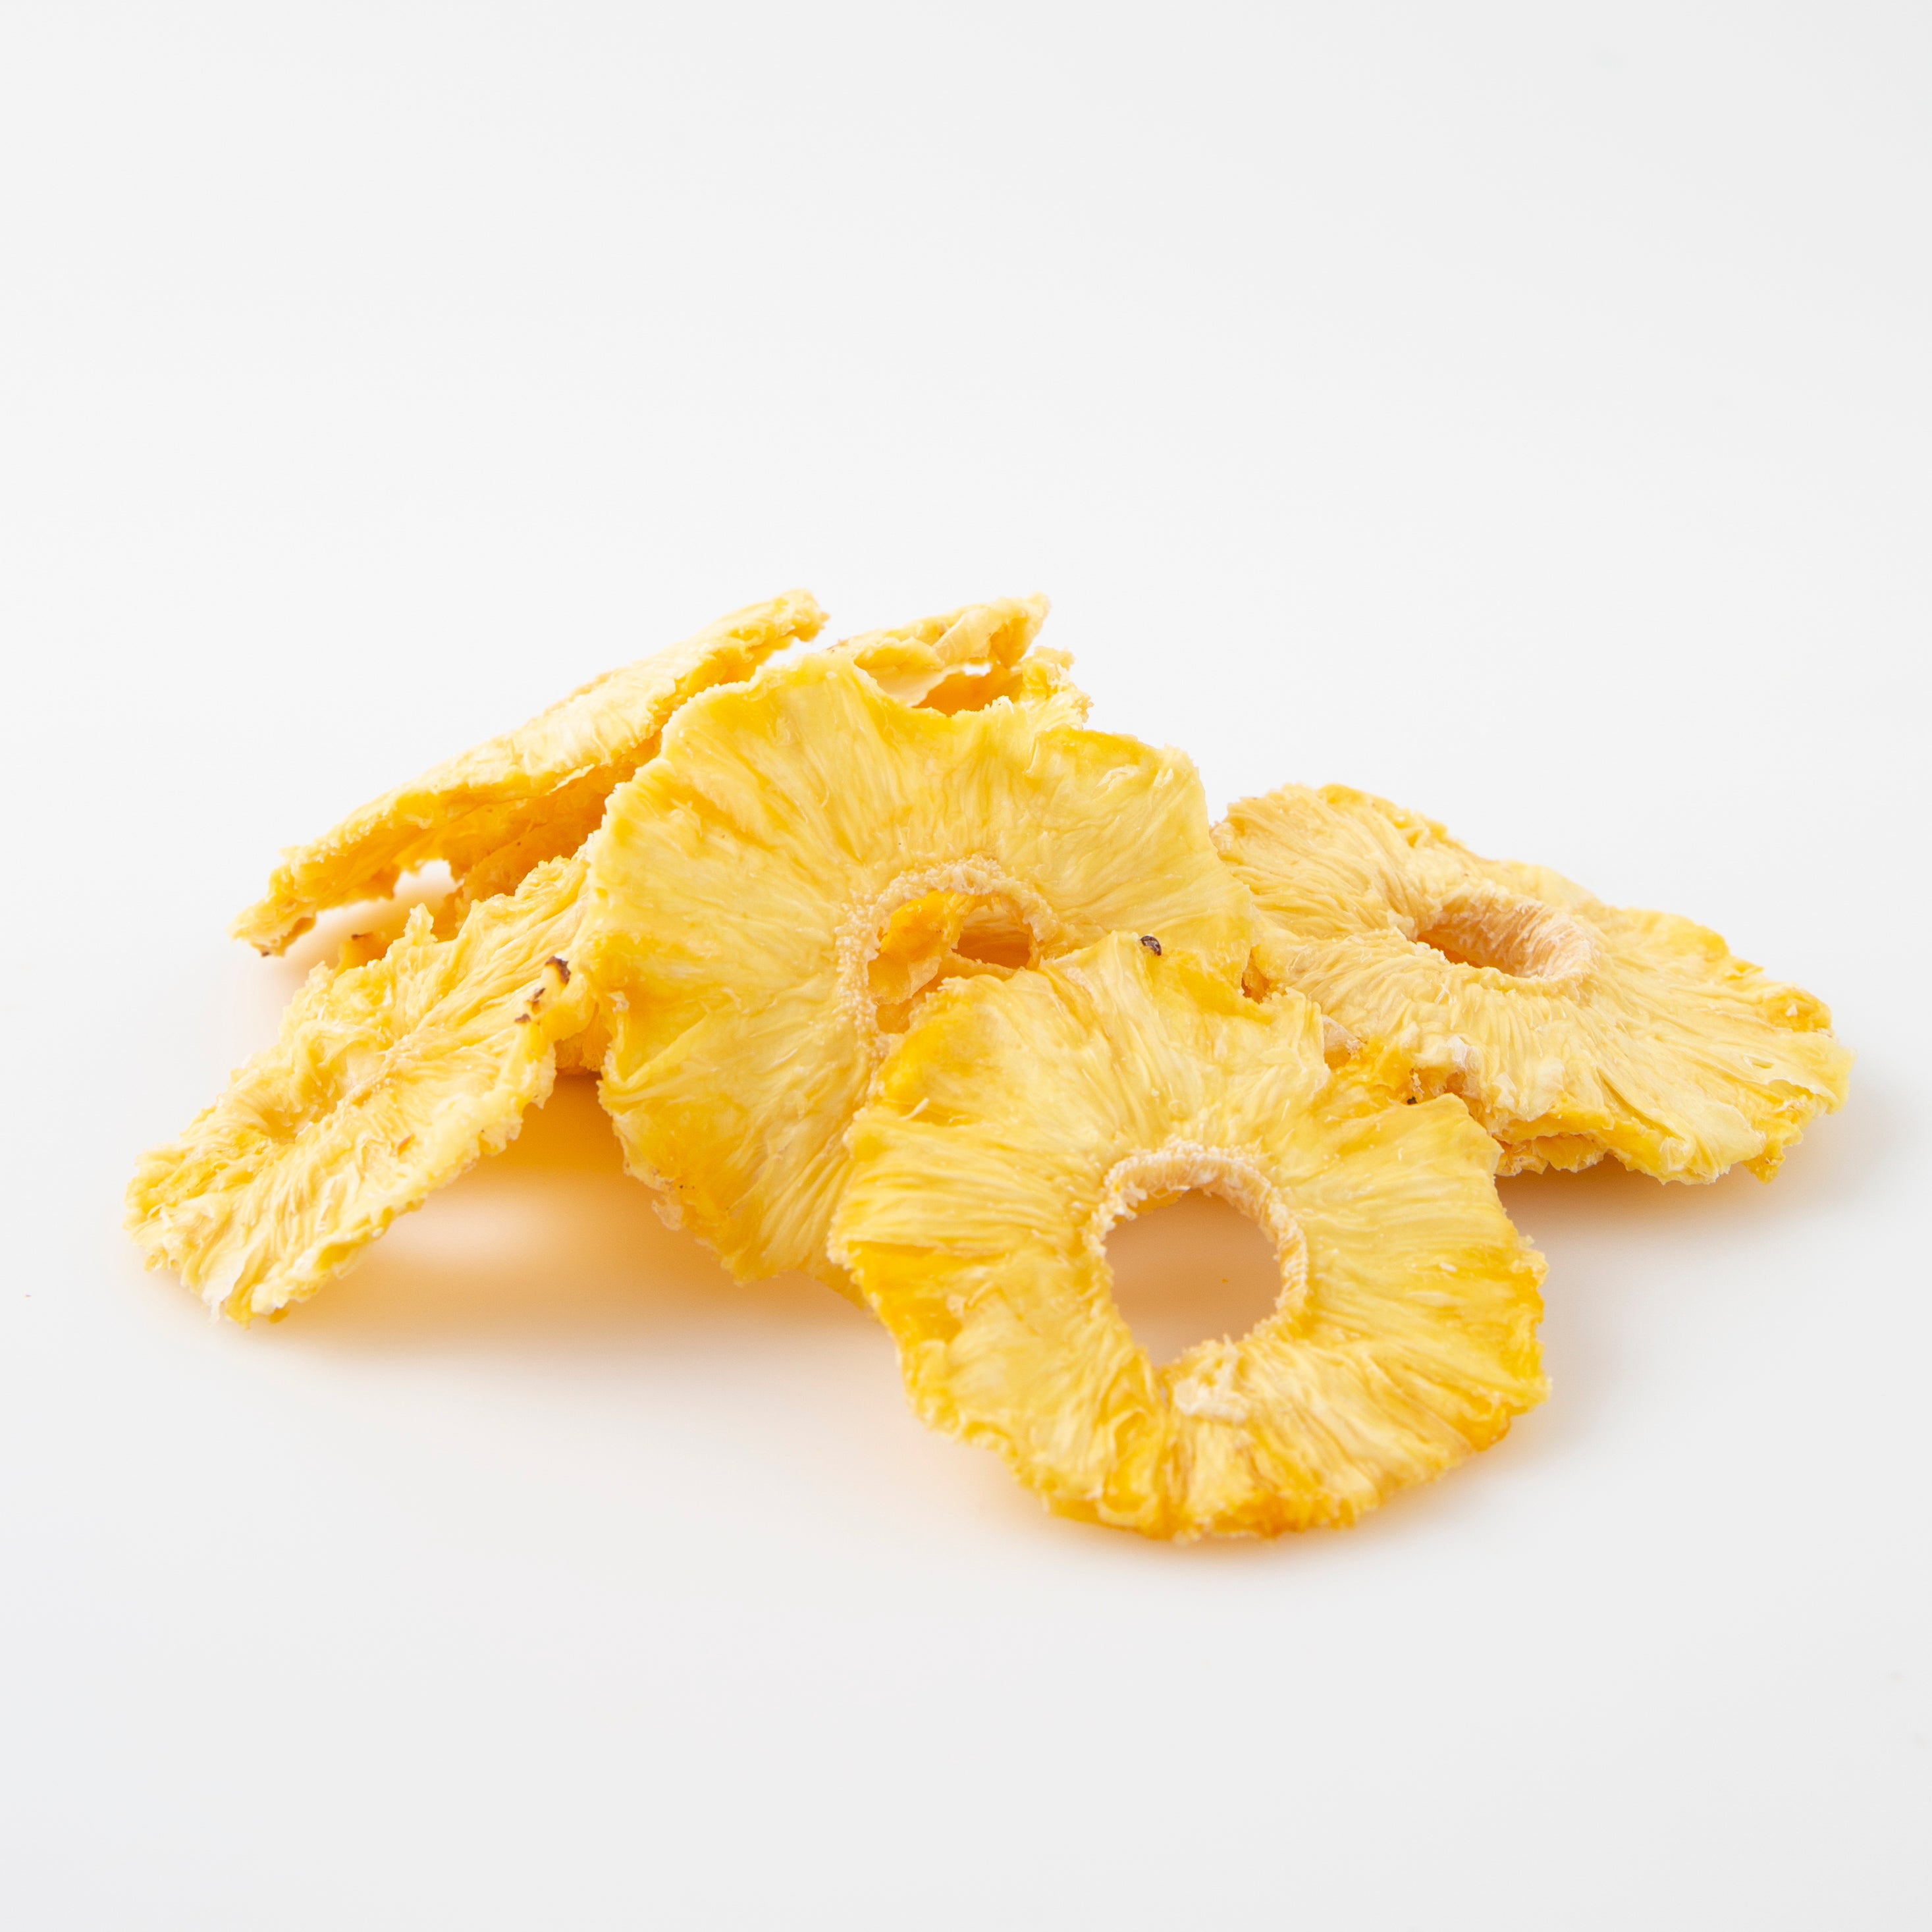 Dried Australian Pineapple (Dried Fruits) Image 1 - Naked Foods